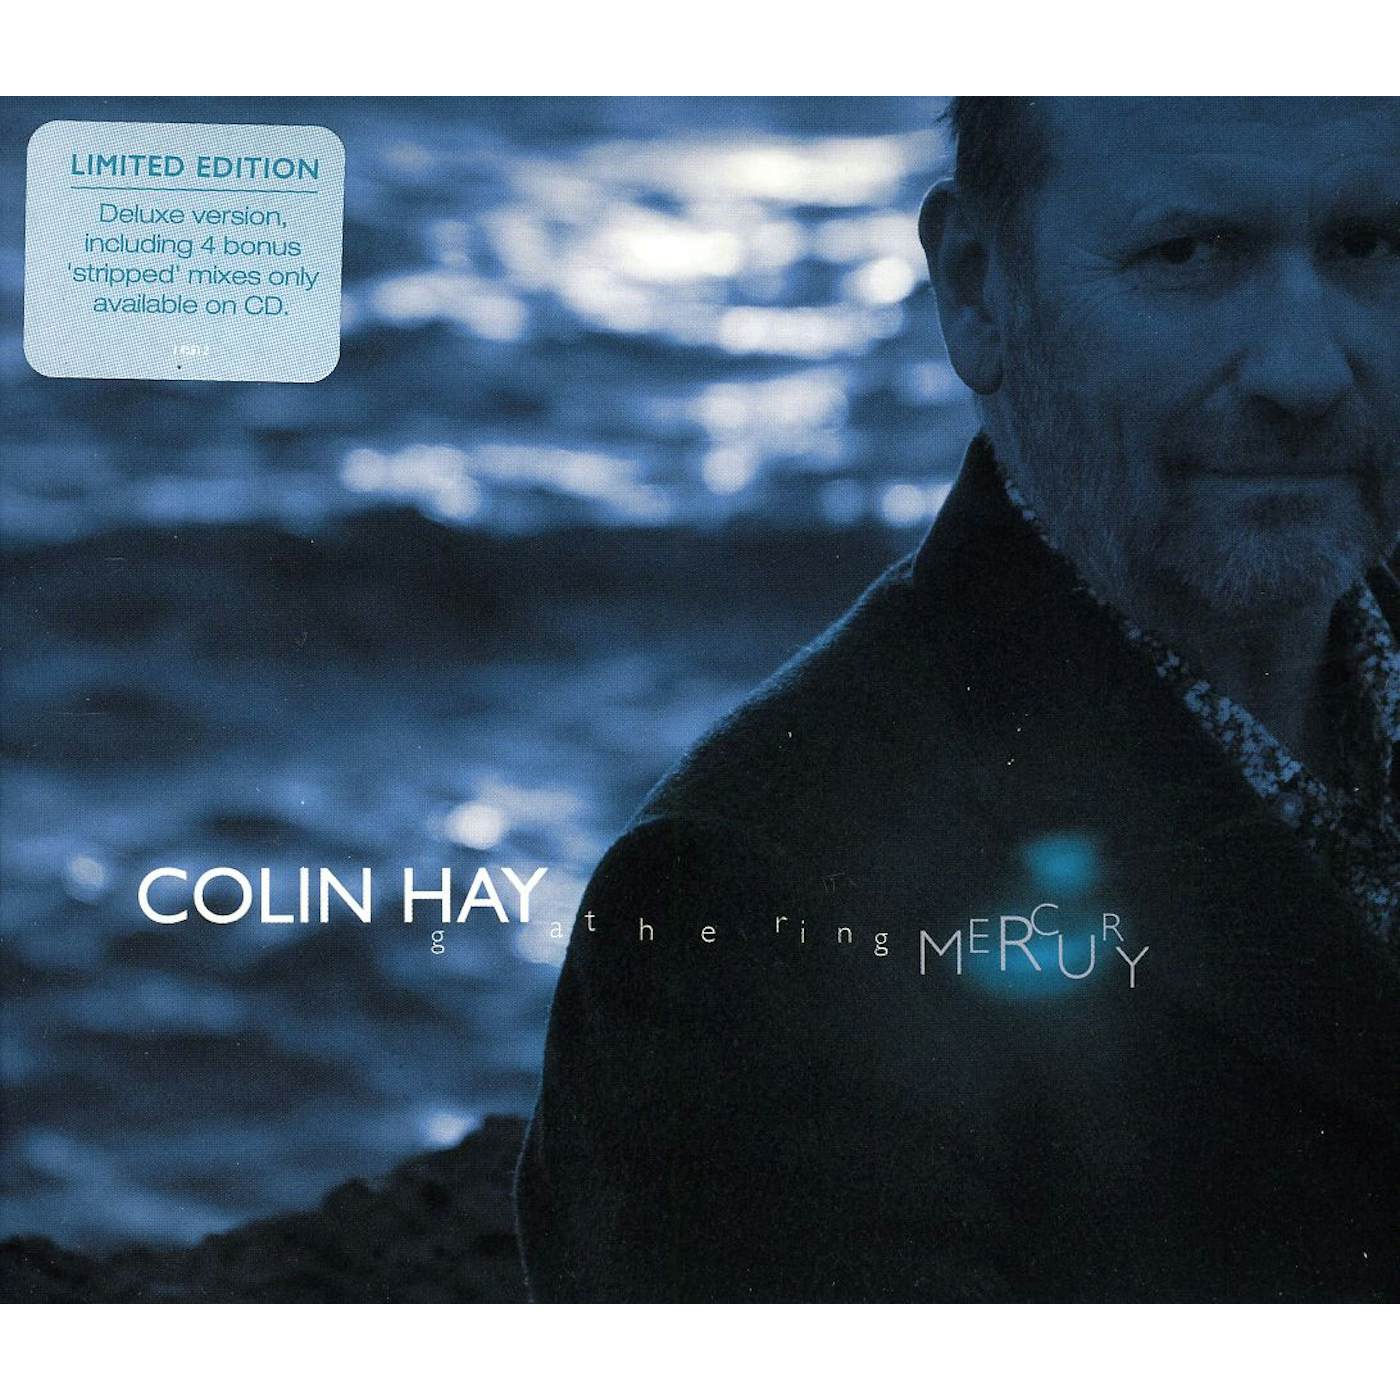 Colin Hay GATHERING MERCURY CD